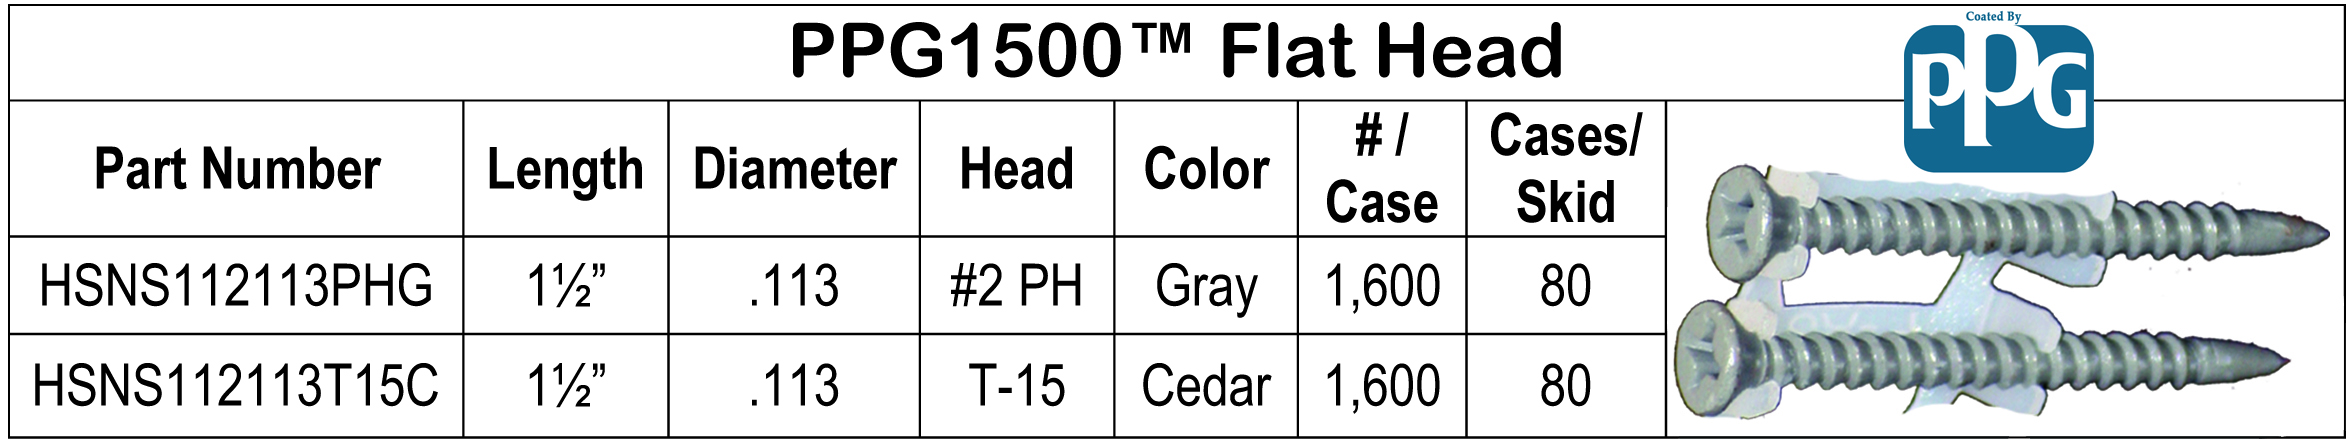 PPG1500 Gray Flat Head Plastic Coil